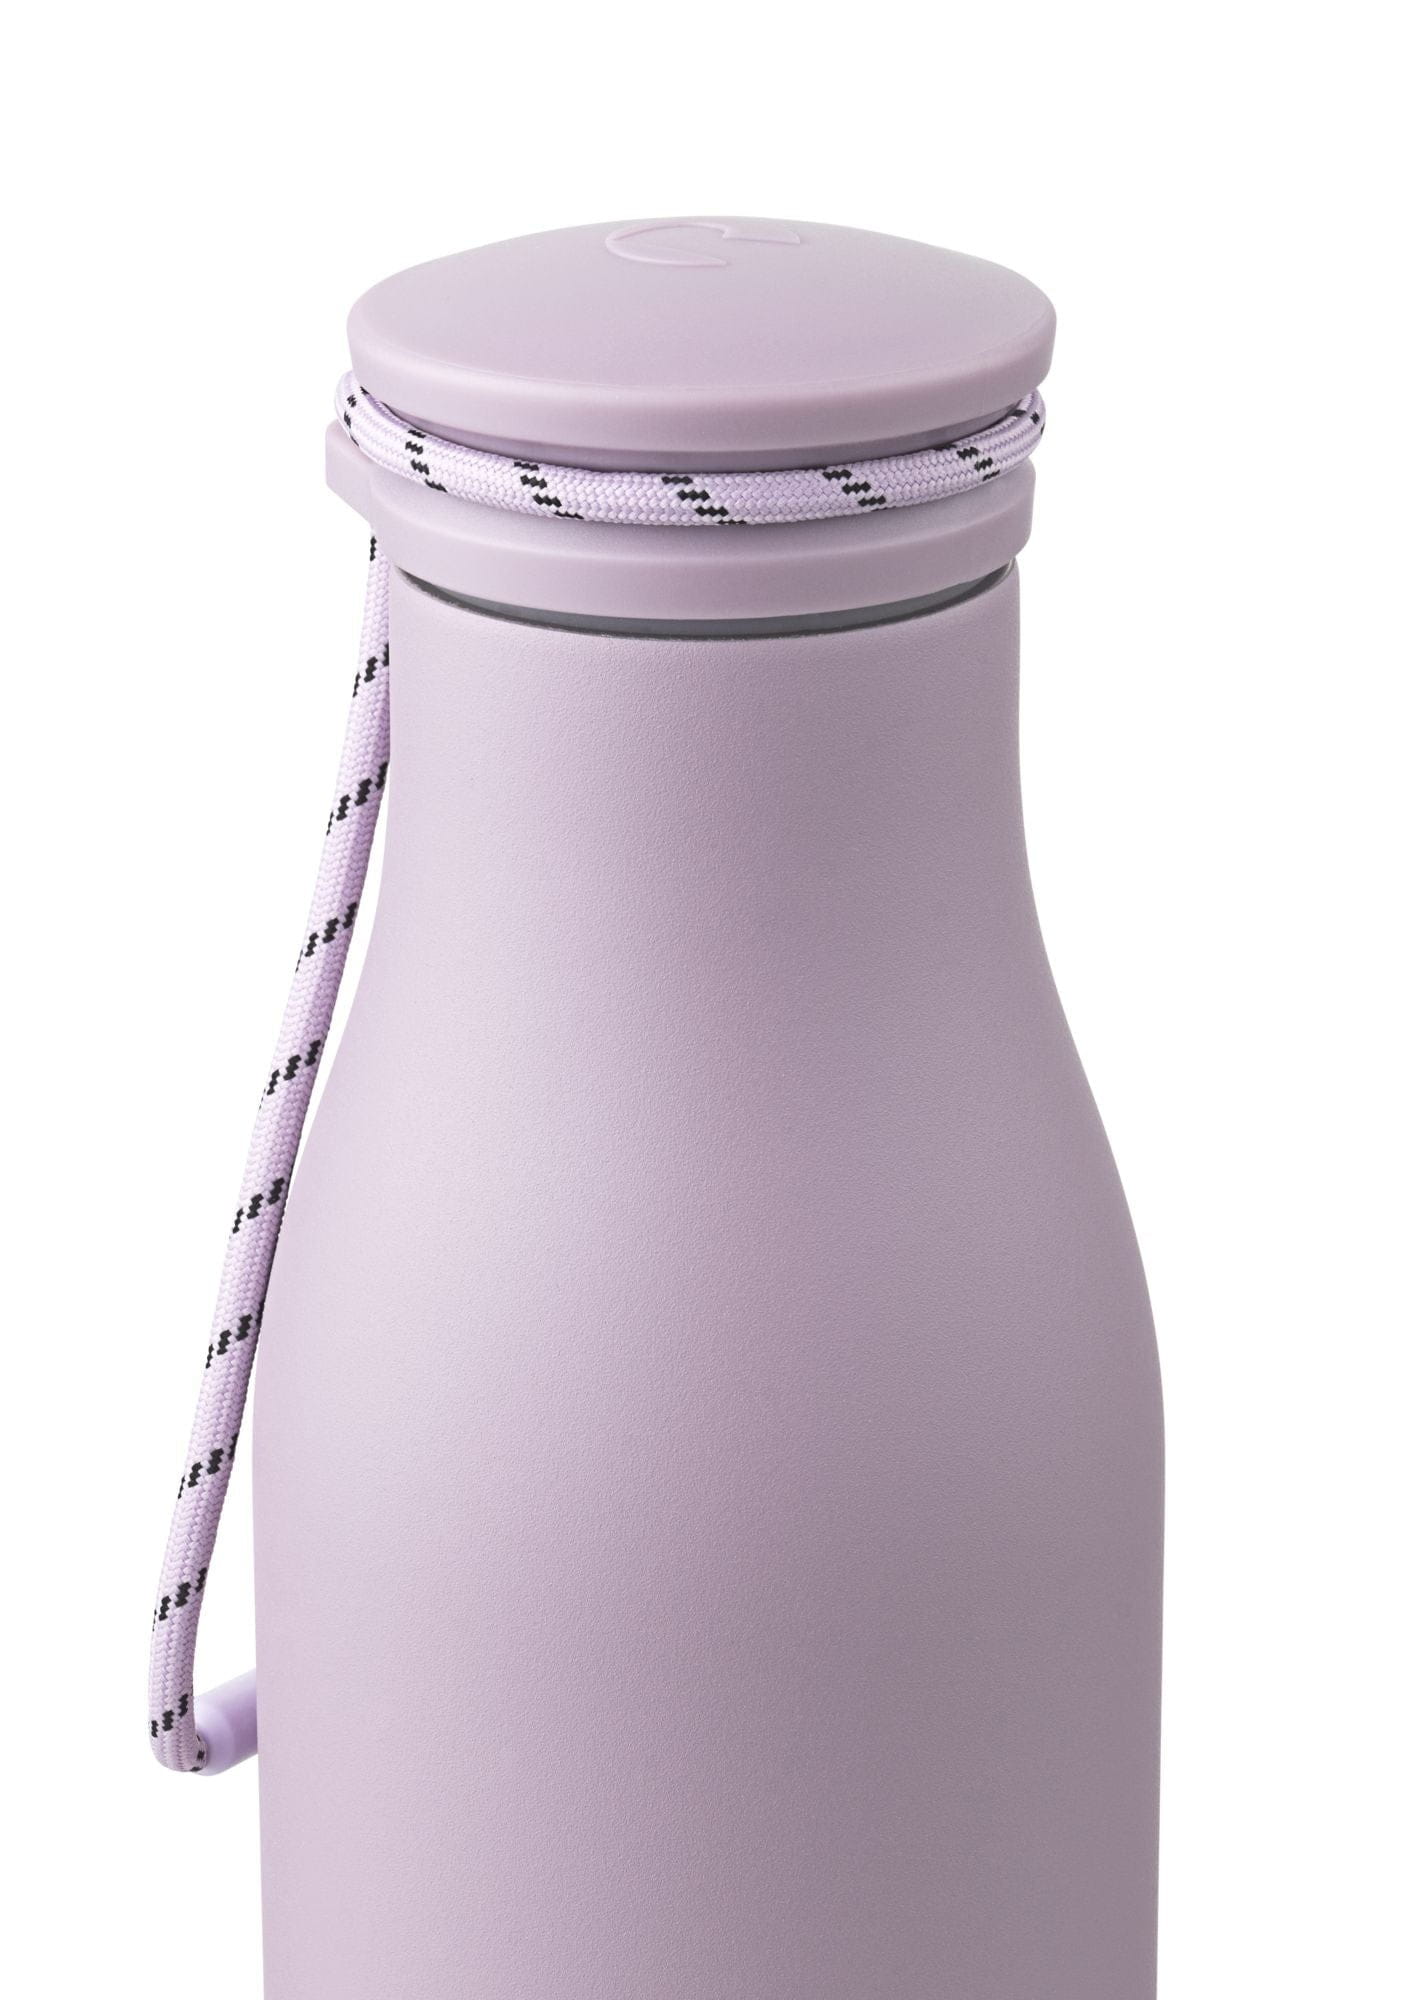 Rosendahl GC Outdoor Thermos Water Bottle 500 ml, violet